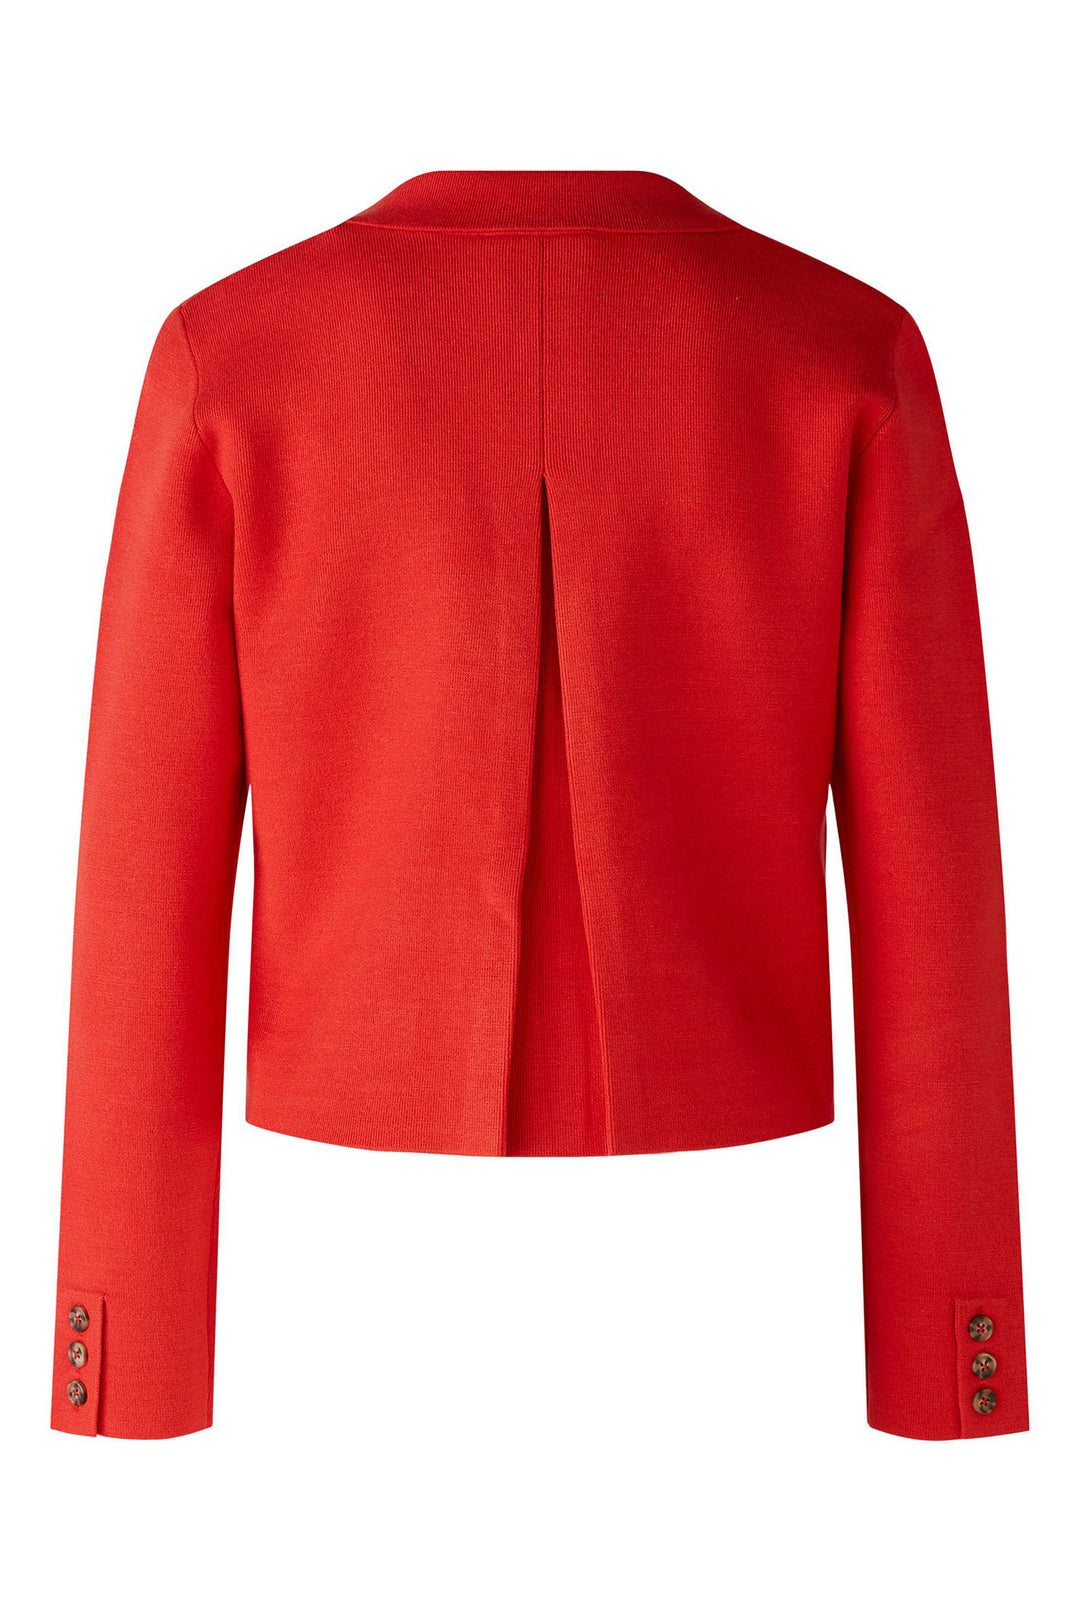 Oui 86688 Aura Orange Two Button Knitted Cropped Jacket - Olivia Grace Fashion